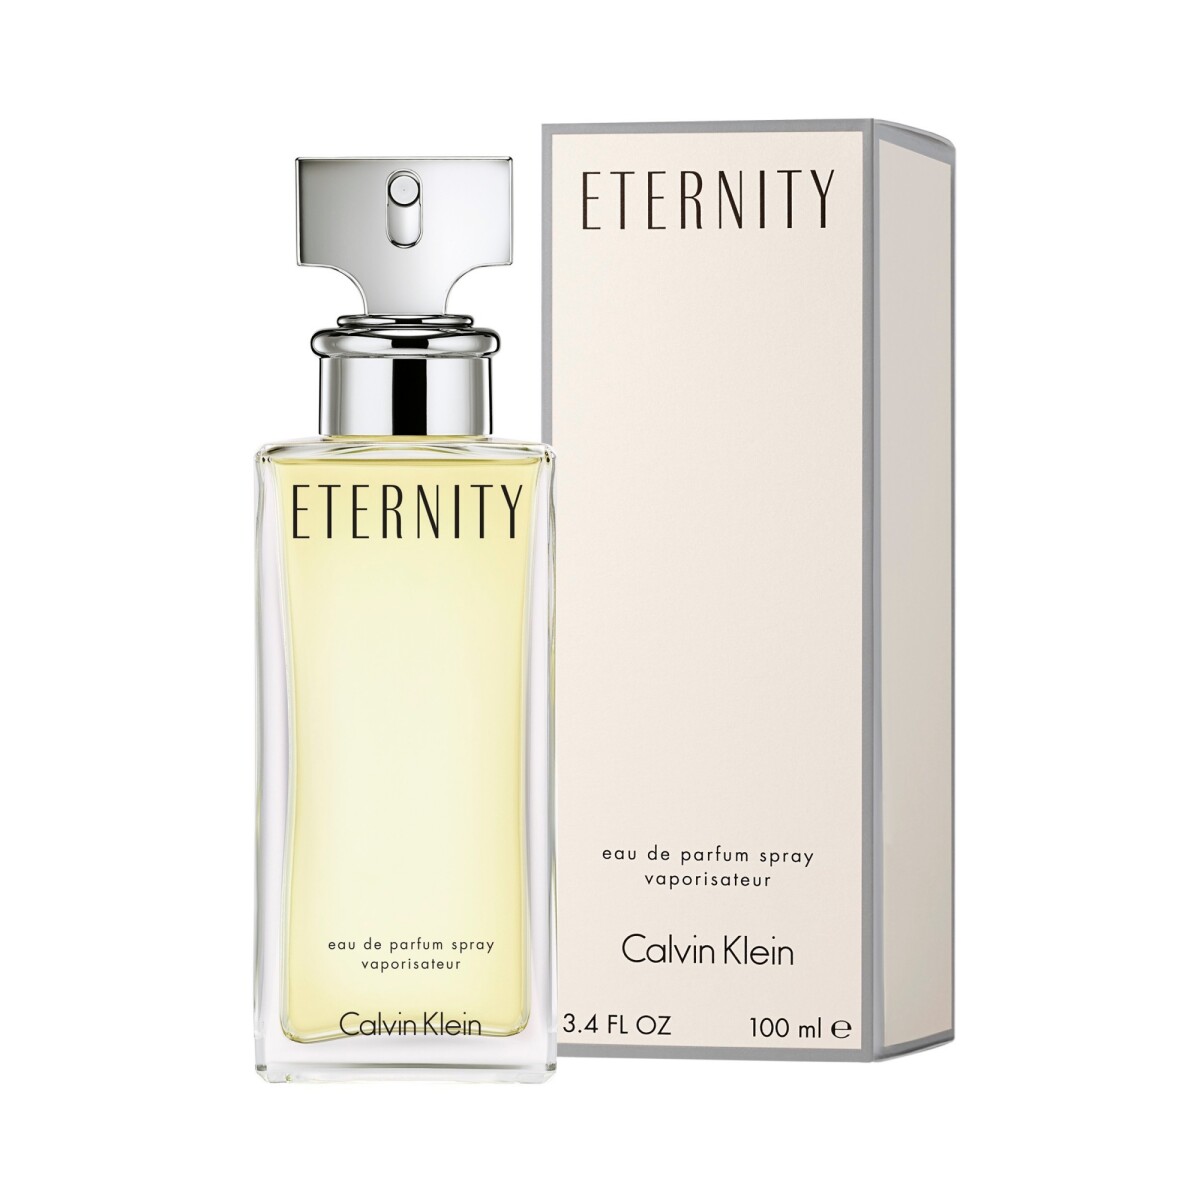 Perfume Ck Eternity Edp 100 Ml. 